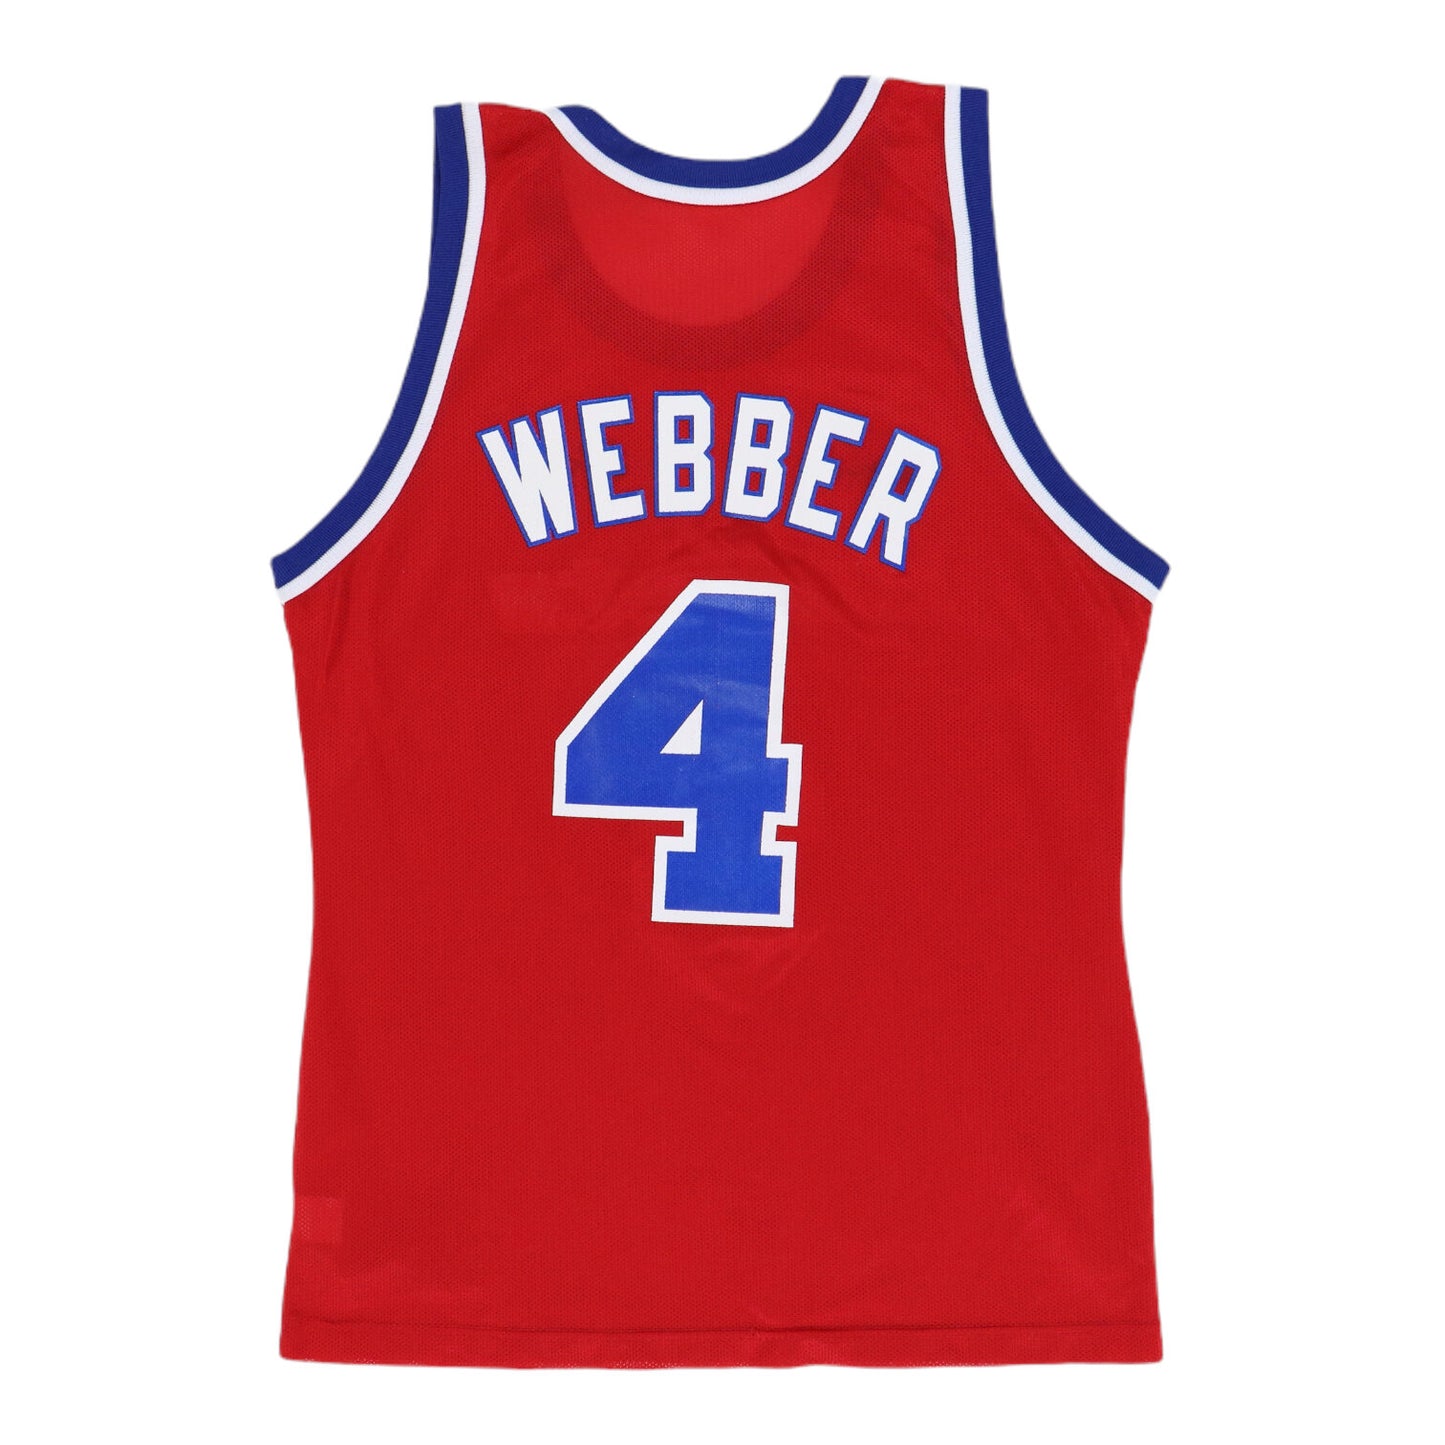 1990s Chris Webber Washington Bullets NBA Basketball Jersey